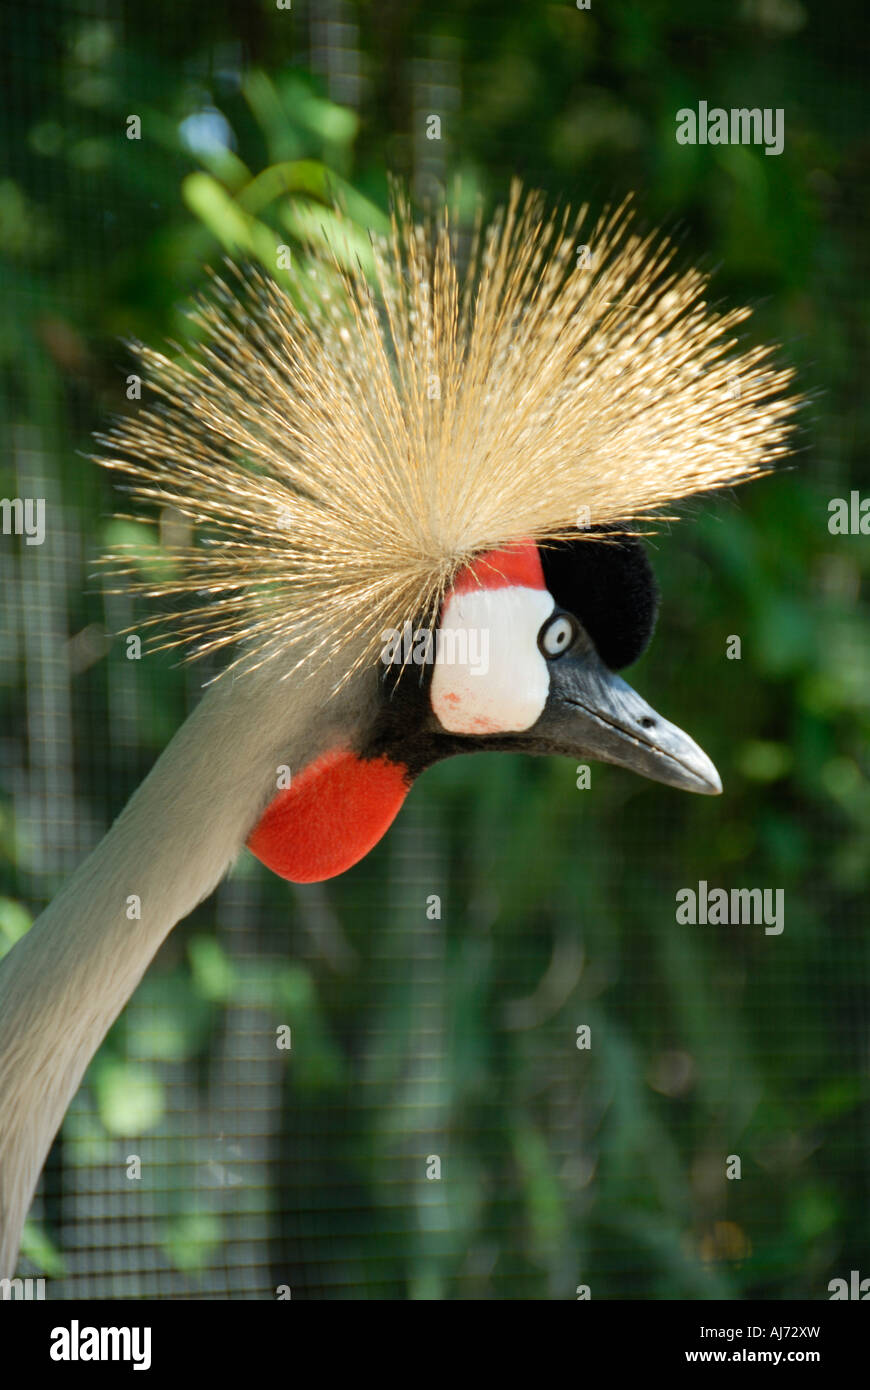 West African Crowned Crane national bird of Nigeria Stock Photo - Alamy